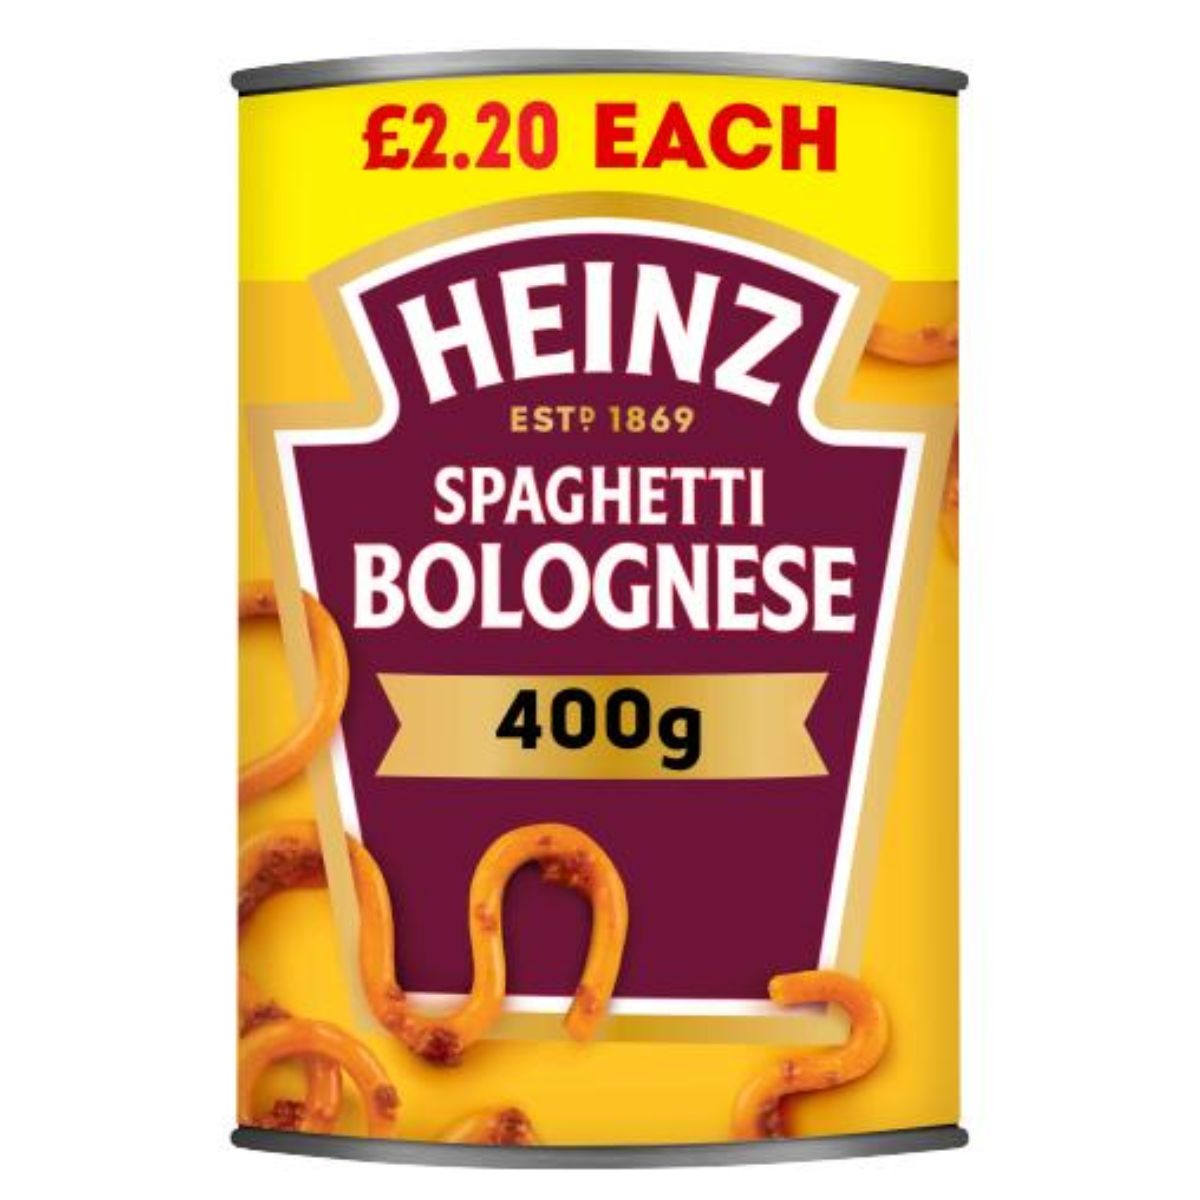 Heinz - Spaghetti Bolognese - 400g.